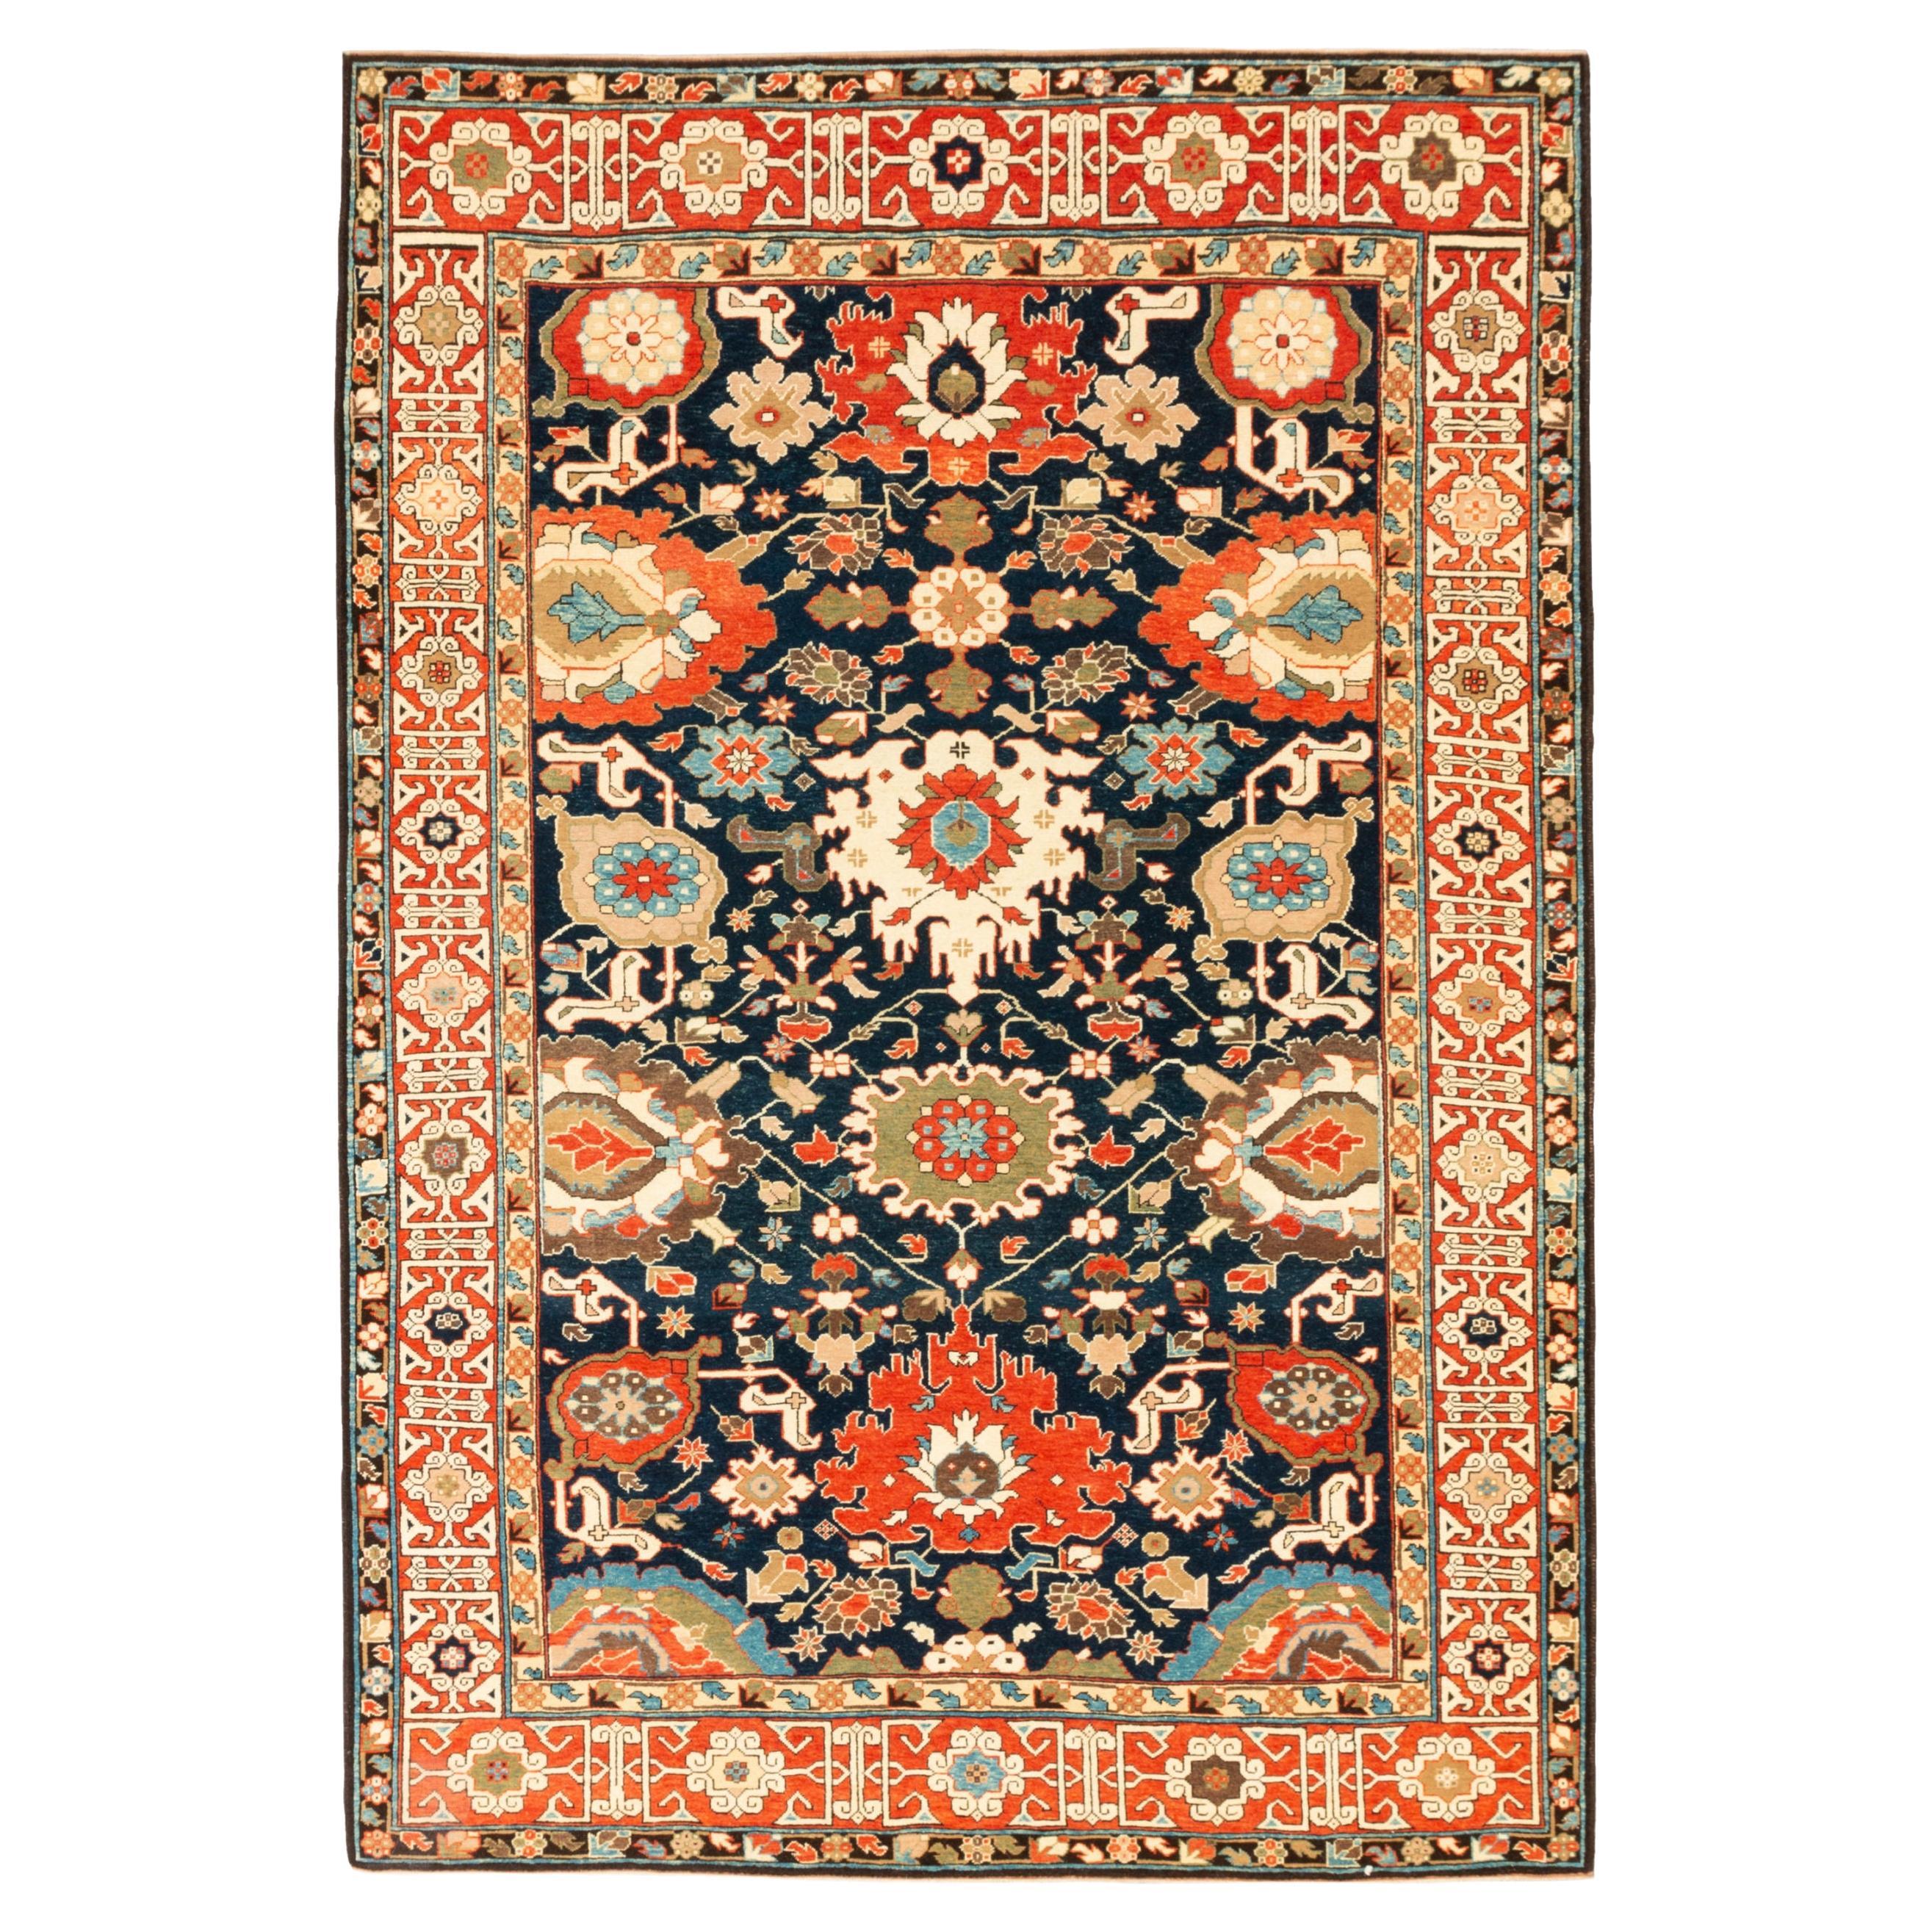 Ararat Rugs Harshang Design with Kufic Border Rug Revival Carpet, Natural Dyed